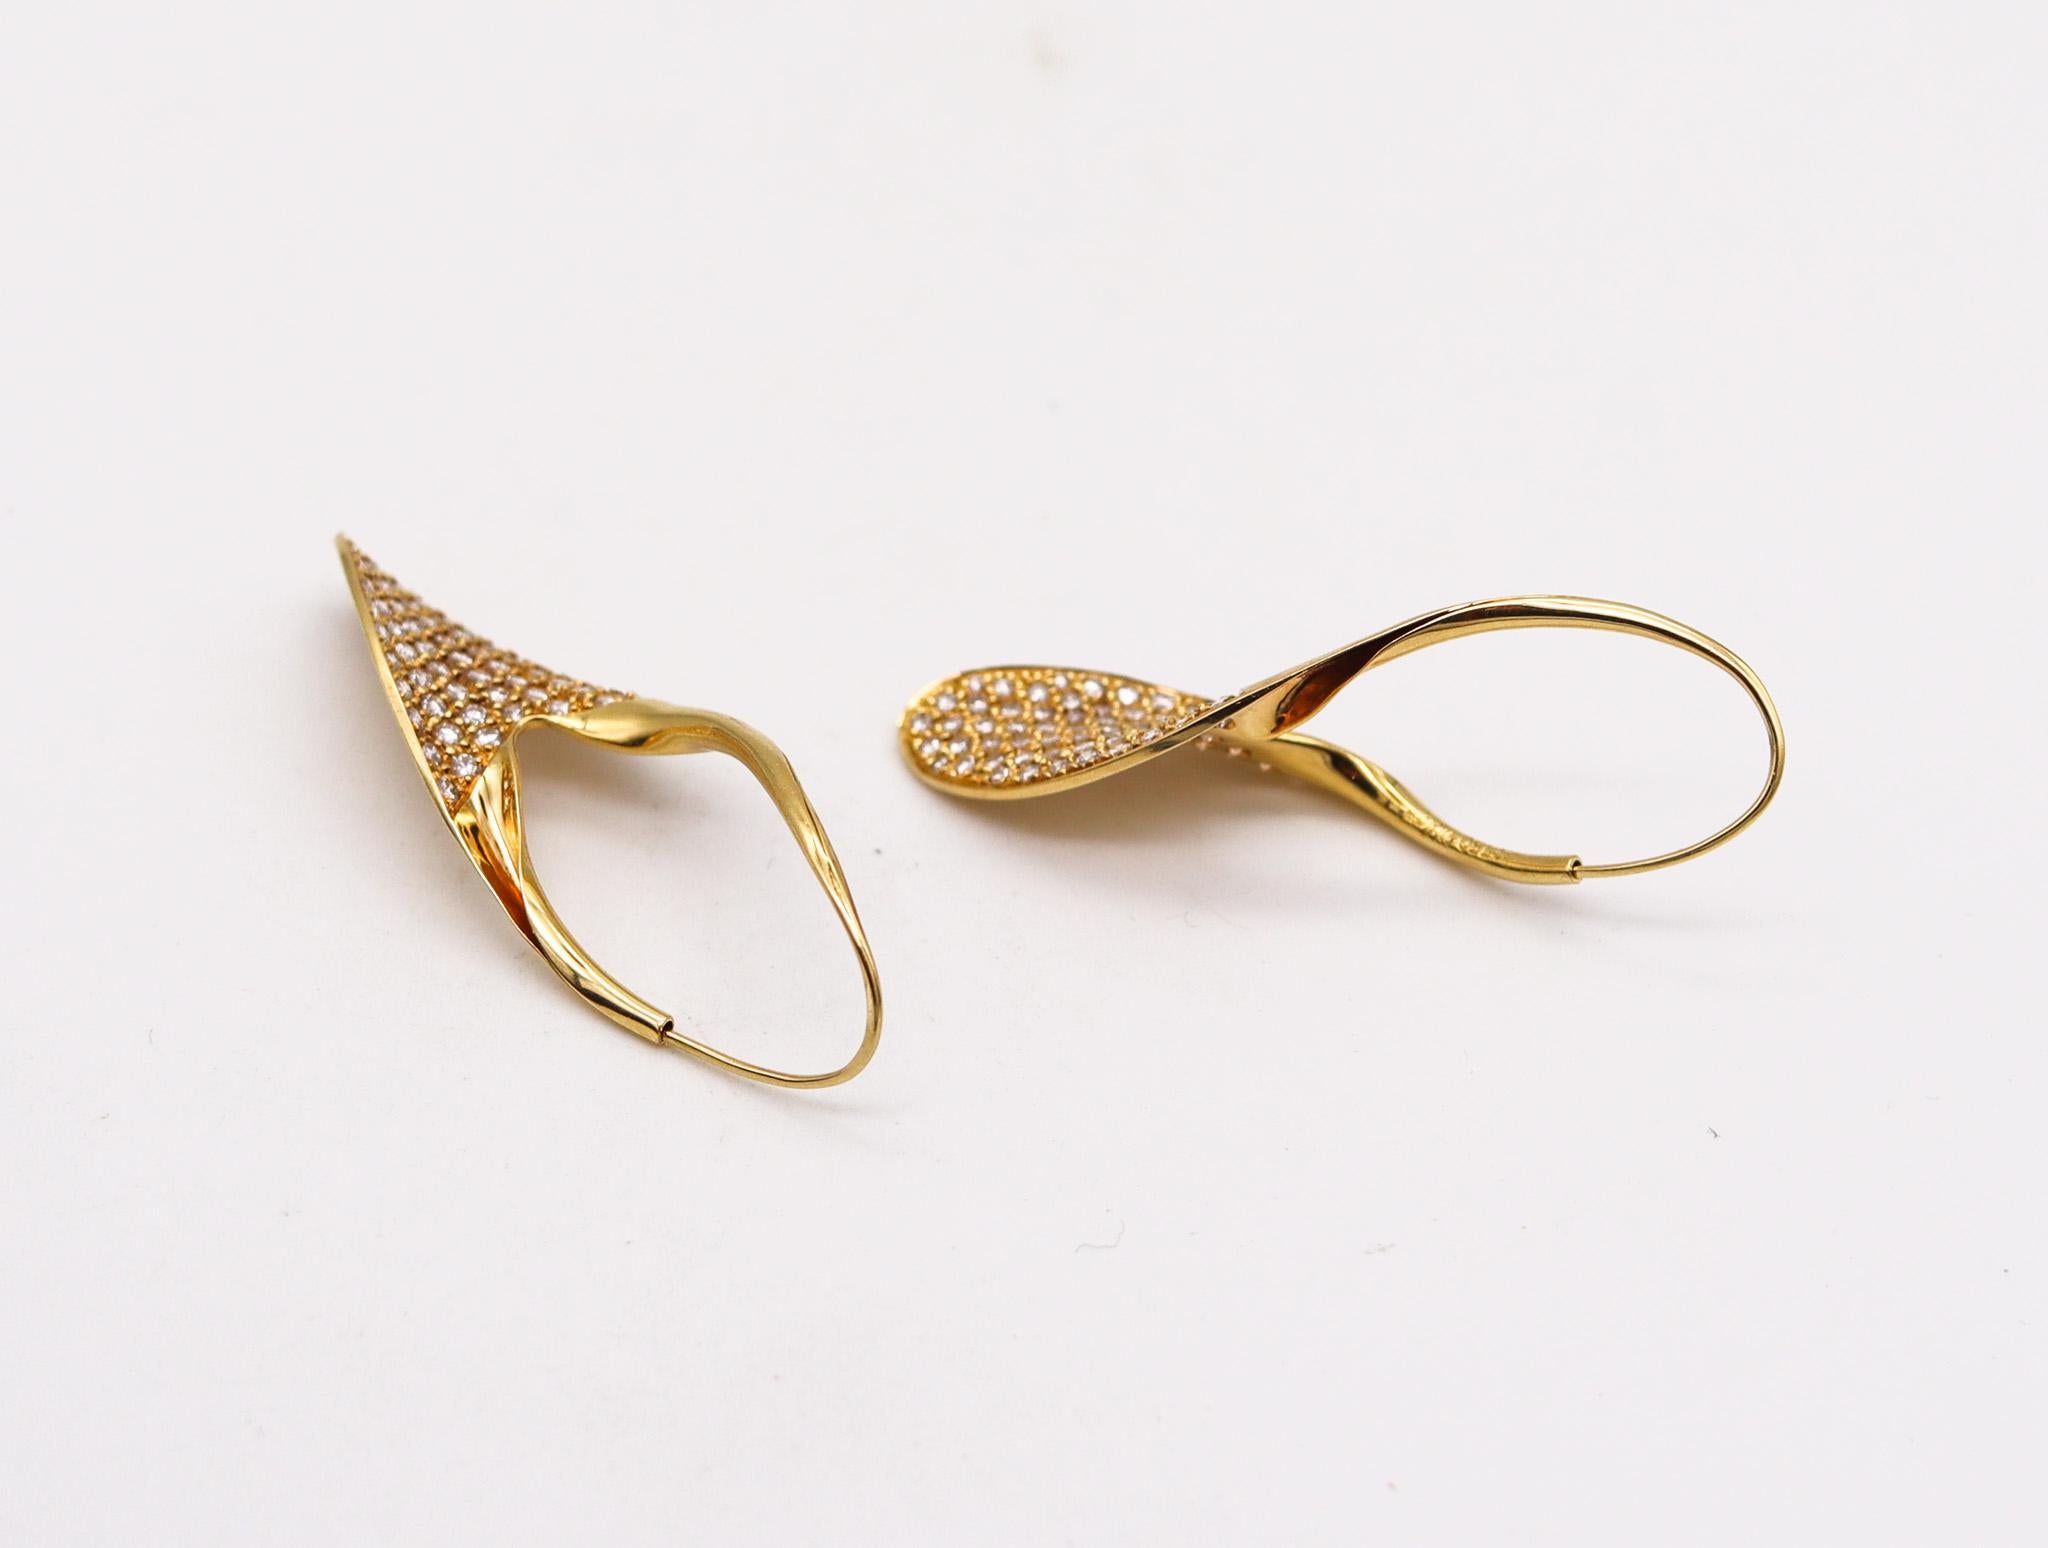 Modernist Michael Good Aerodynamic Drop Earrings in 18kt Gold with 4.08ctw in Diamonds